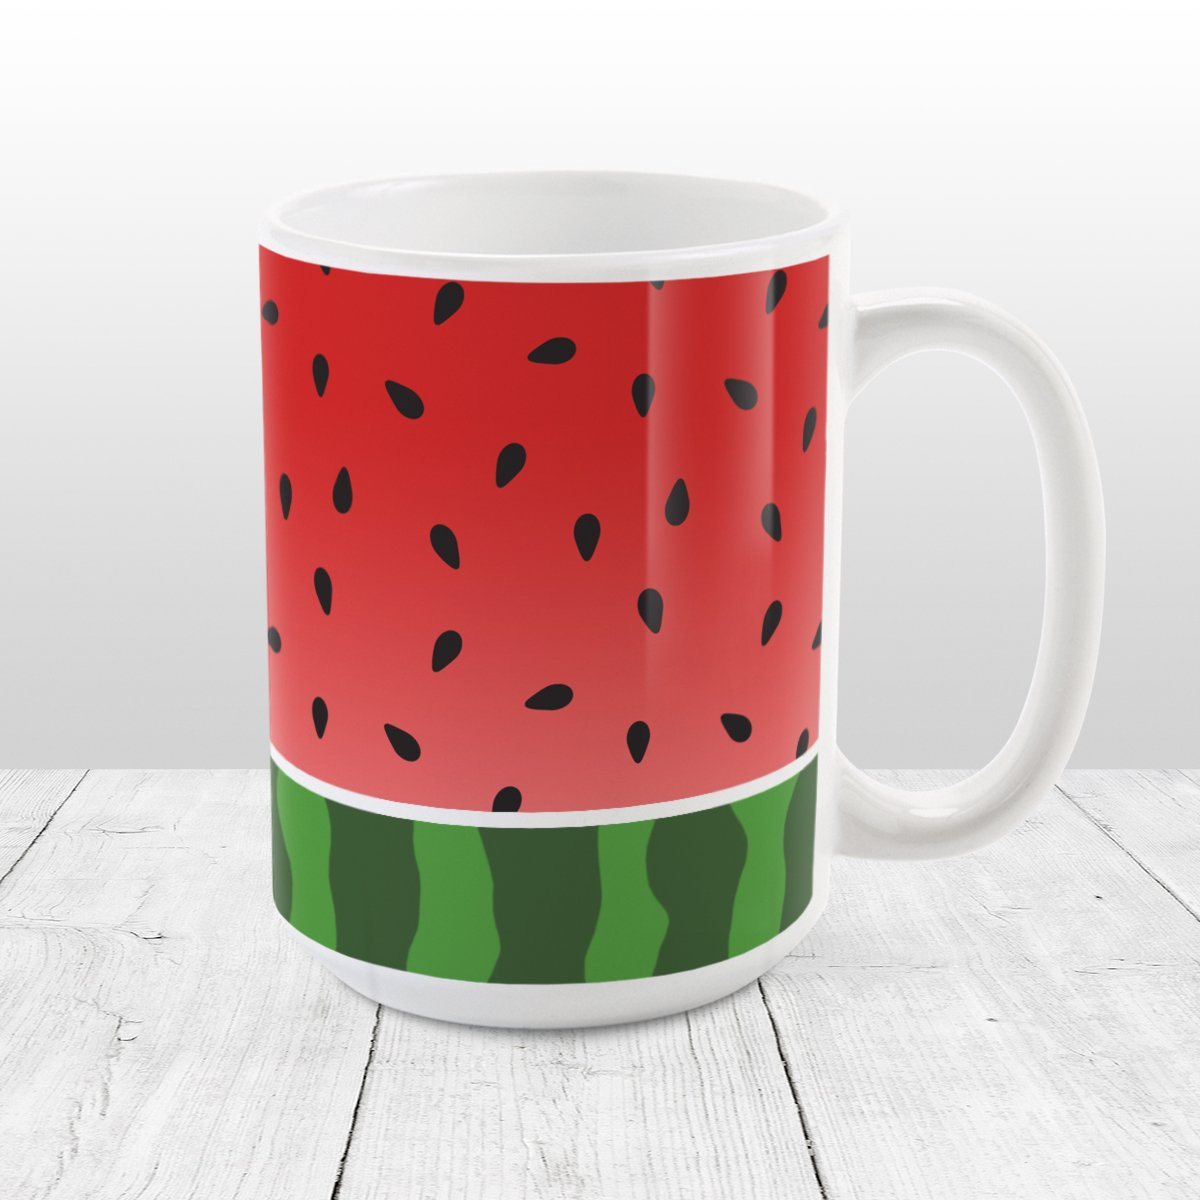 Red and Green Watermelon Mug at Amy's Coffee Mugs